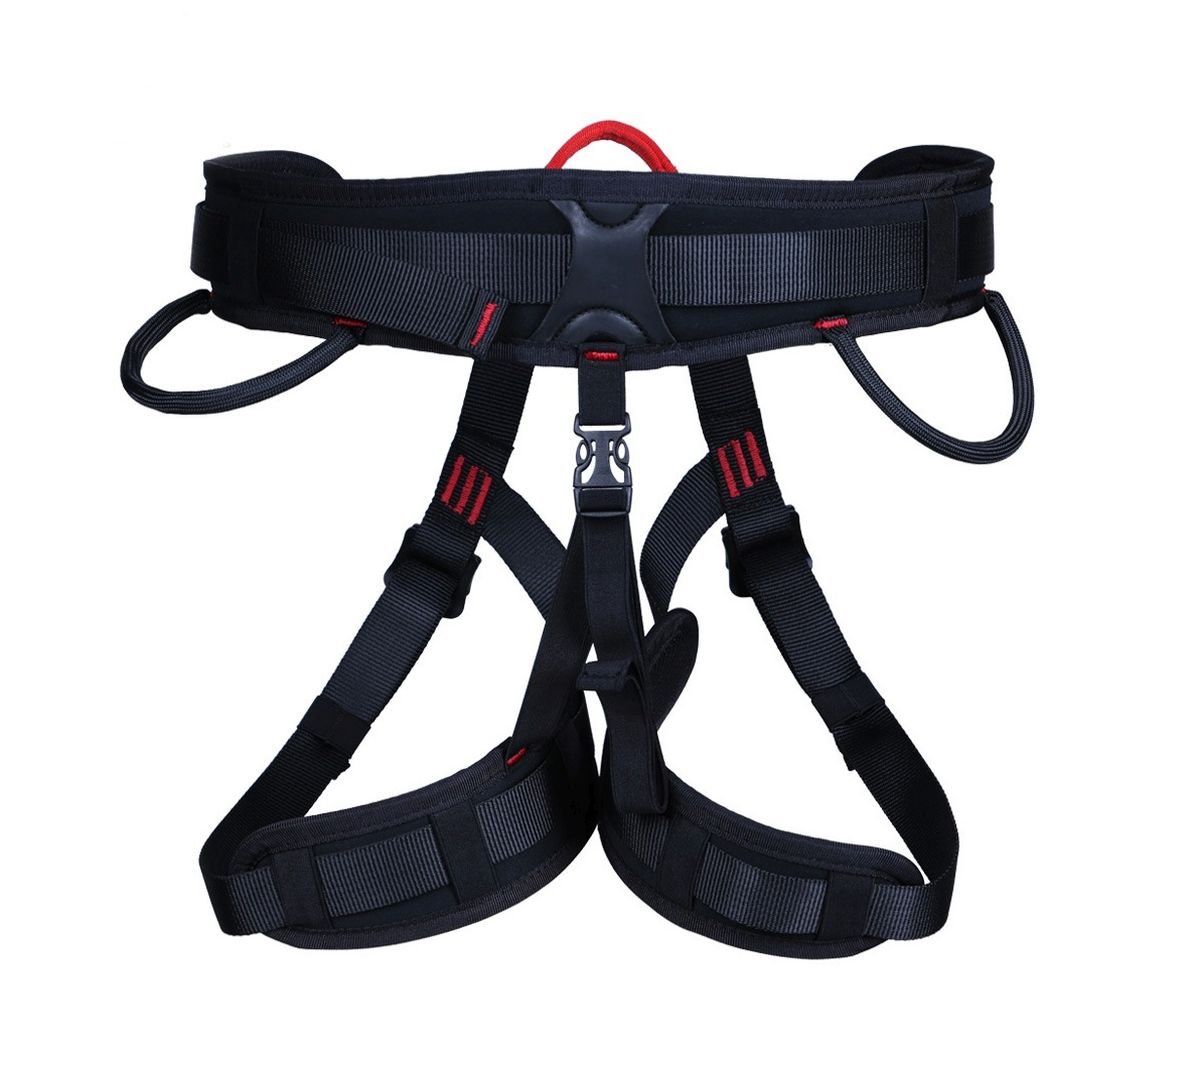 ZL264 Half Body Climbing Harness with Padding, Black/Red - Zeluga